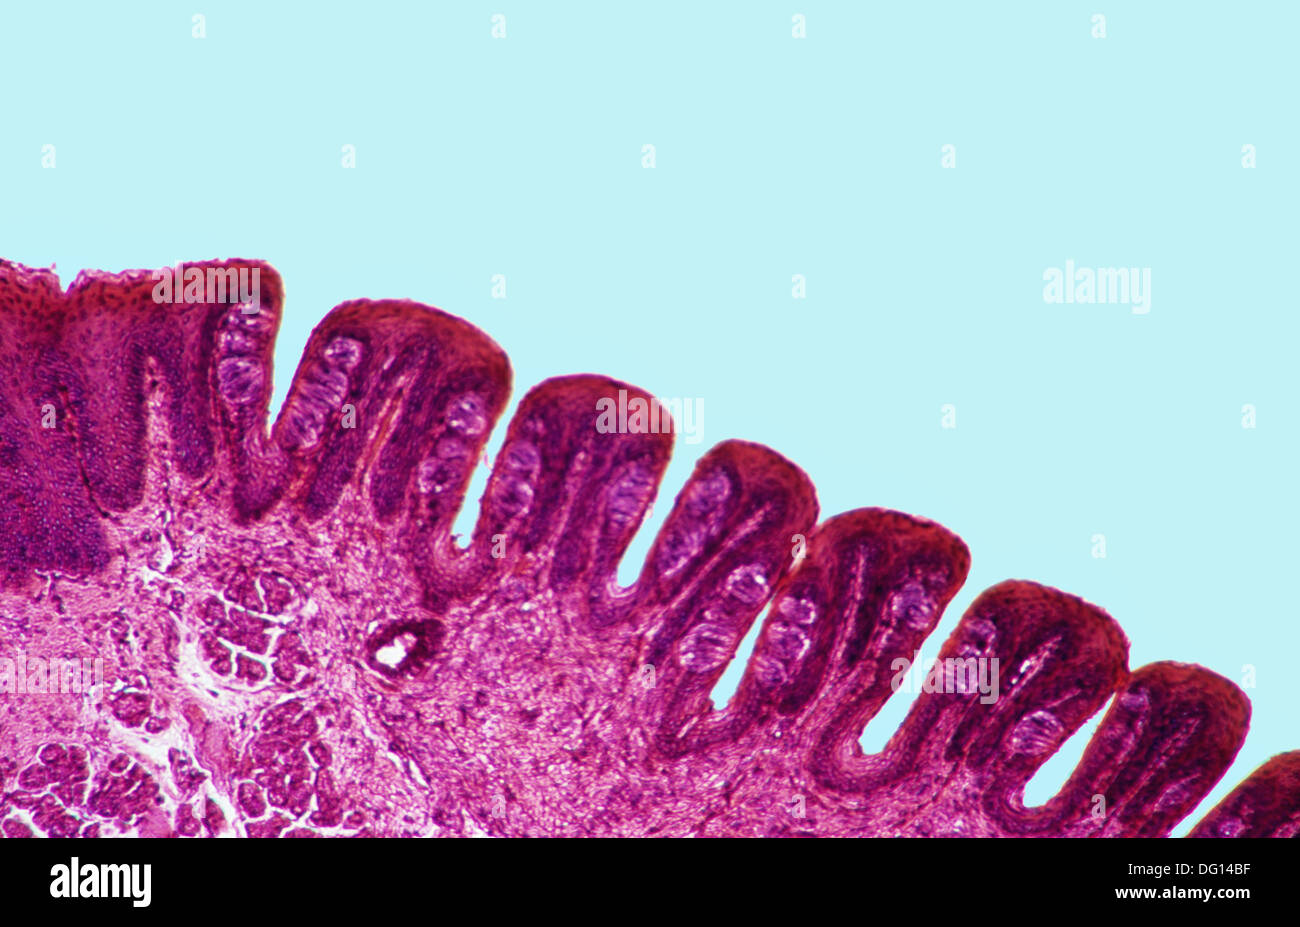 Taste Buds Papillae 100 X Taste Tongue Epithelium Tissue Optical Microscope DG14BF 